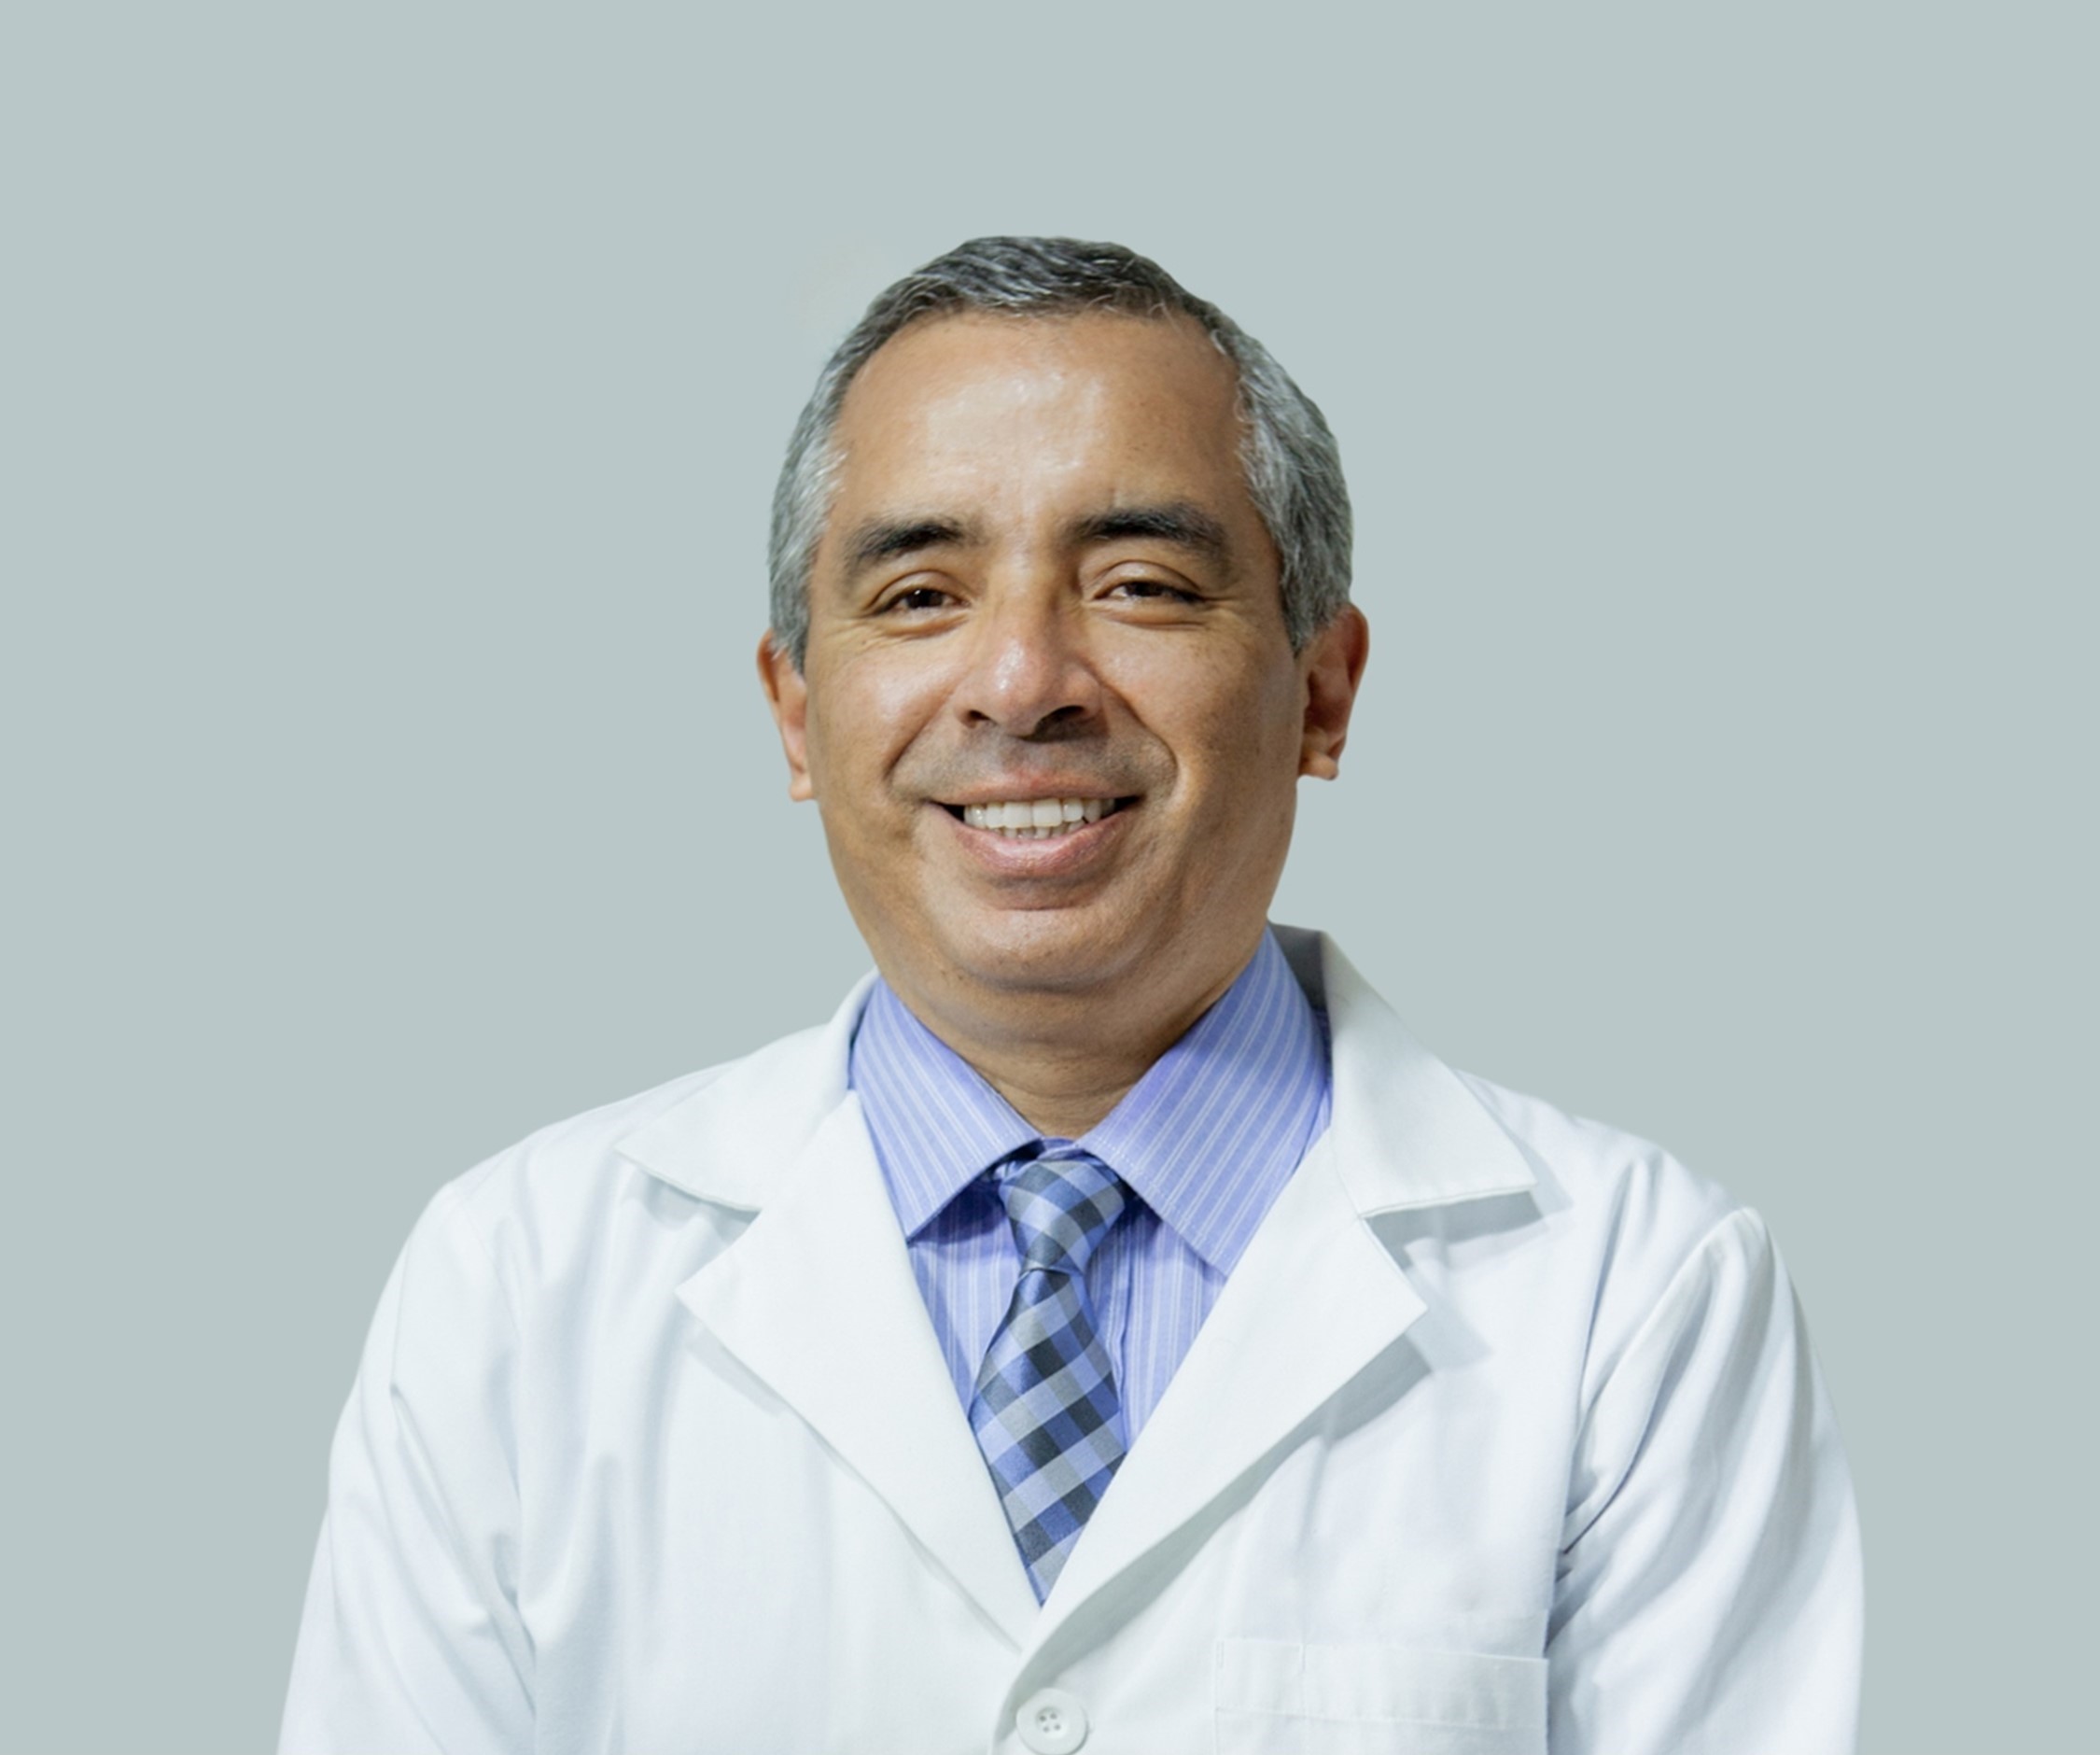 Dr. Alfonso Cardenas Merino Oftalmologos Oftalmología Oftalmologo Oftalmólogo